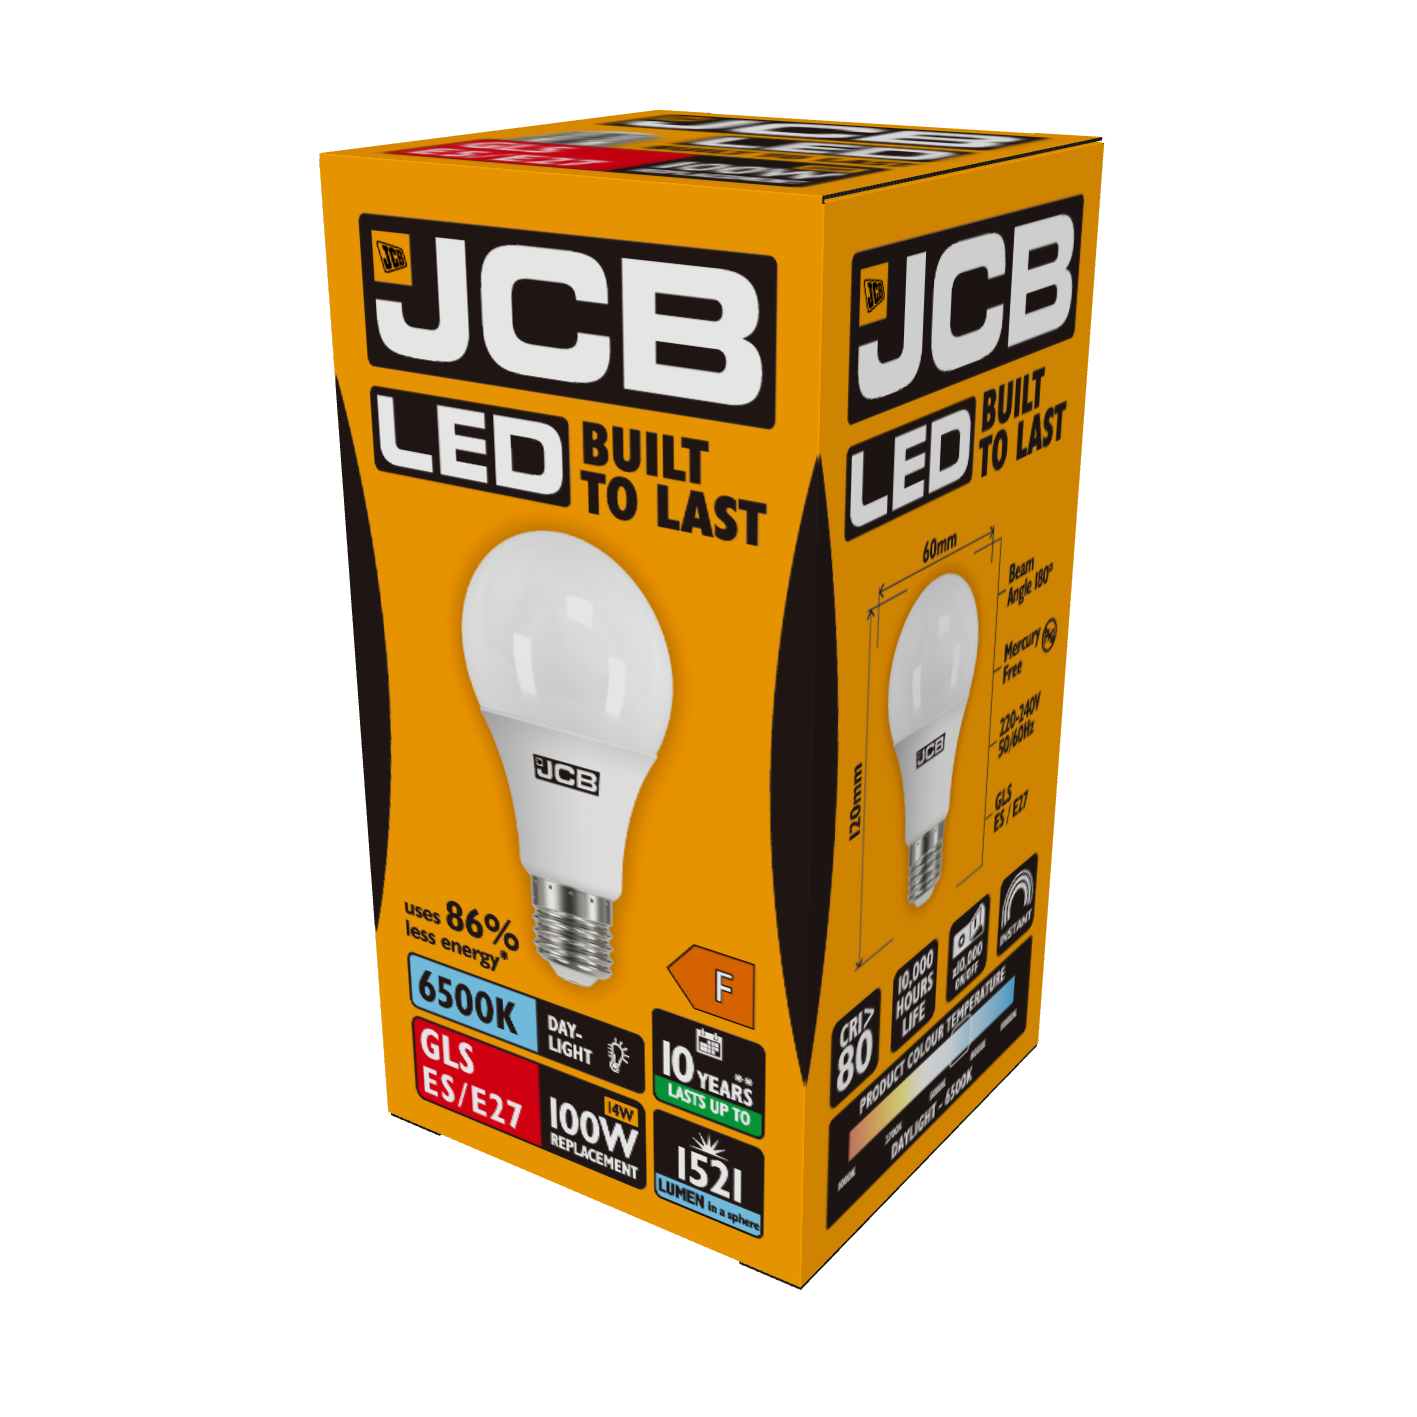 JCB LED GLS E27 (ES) 1.521lm 14W 6.500K (luz día), Caja de 1